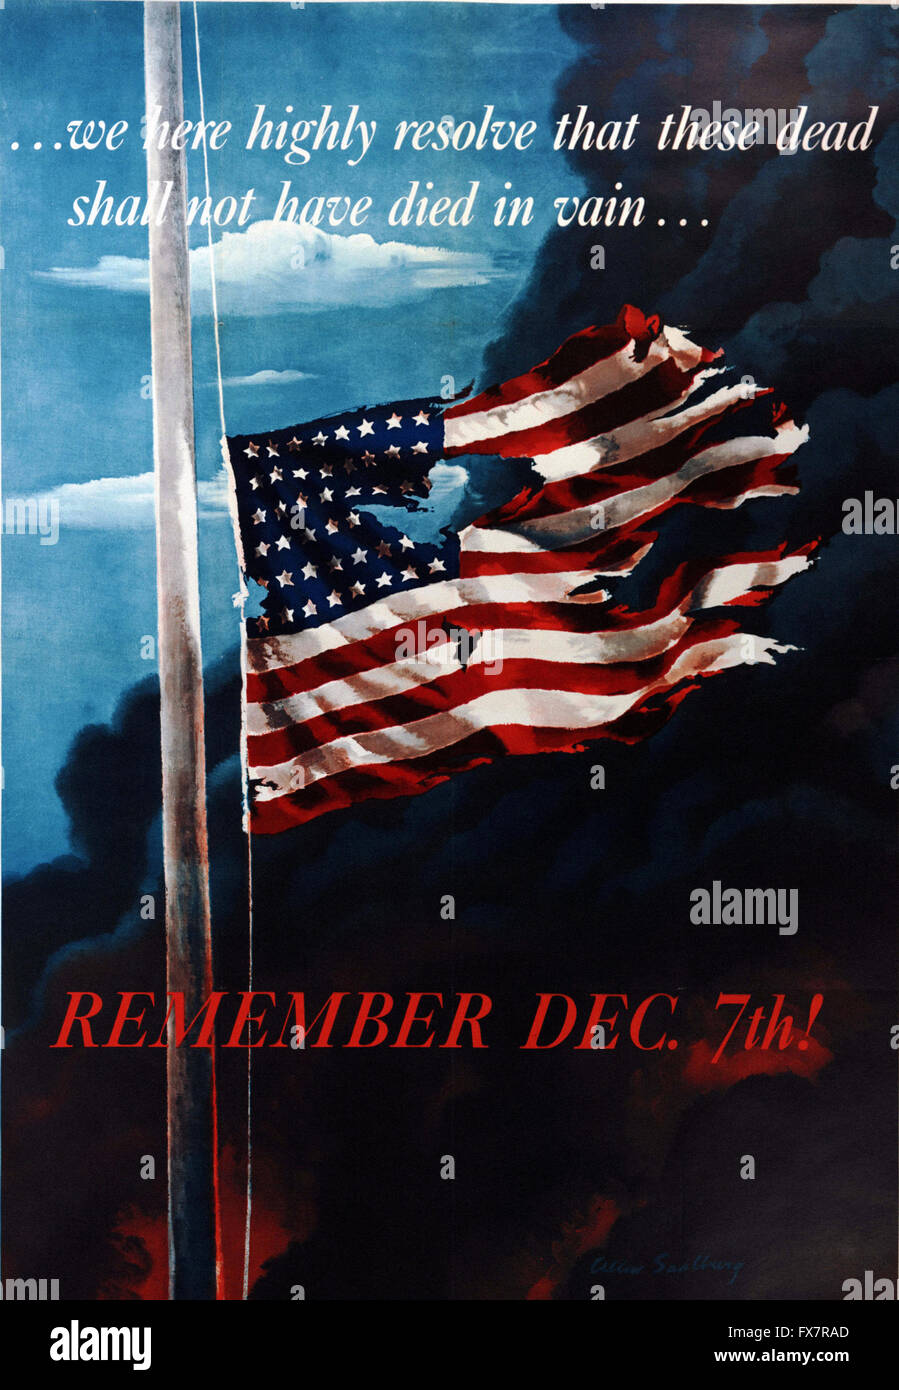 Remenber DEC 7 th - World War II - U.S propaganda Poster Stock Photo